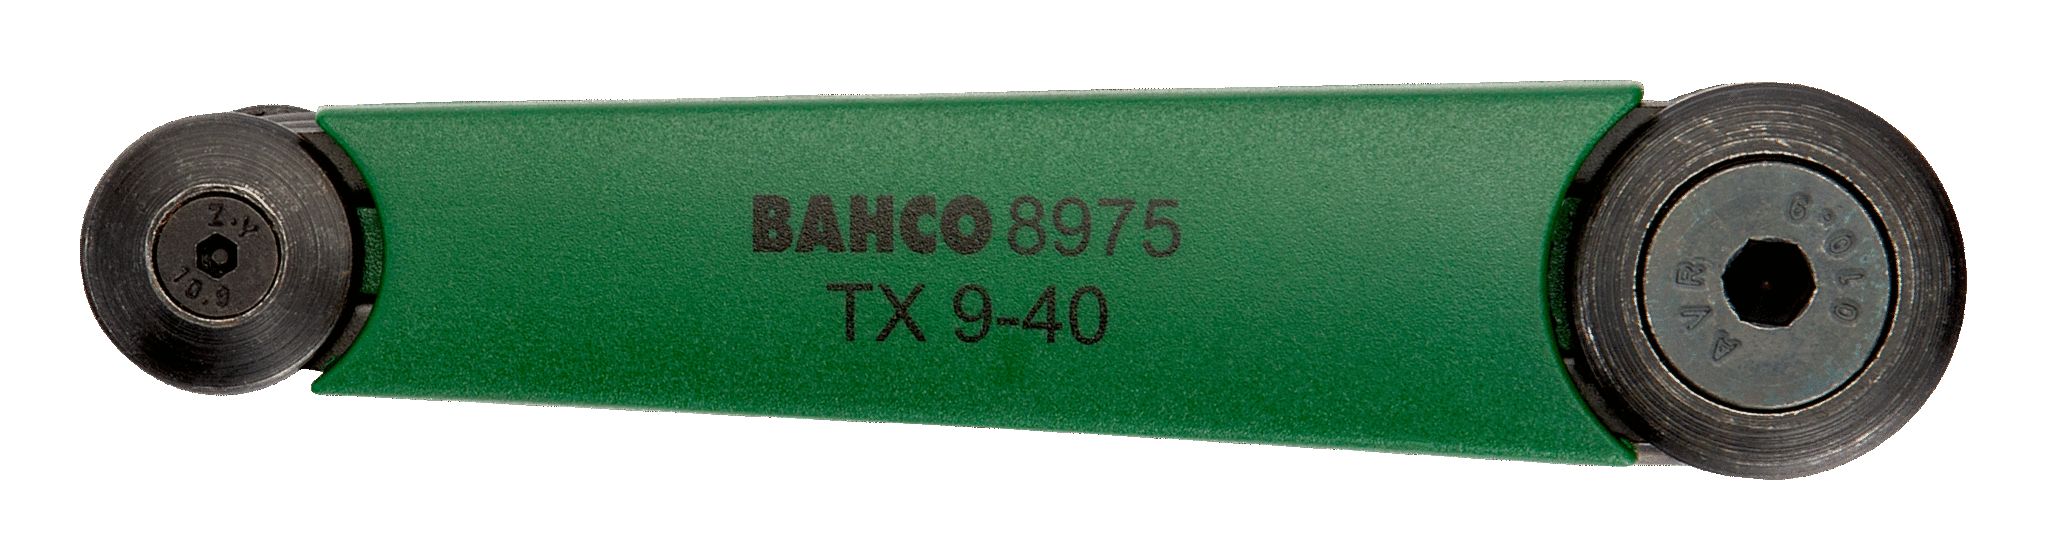 JUEGO LLAVES TORX T9-T40 BAHCO (BE-8975)